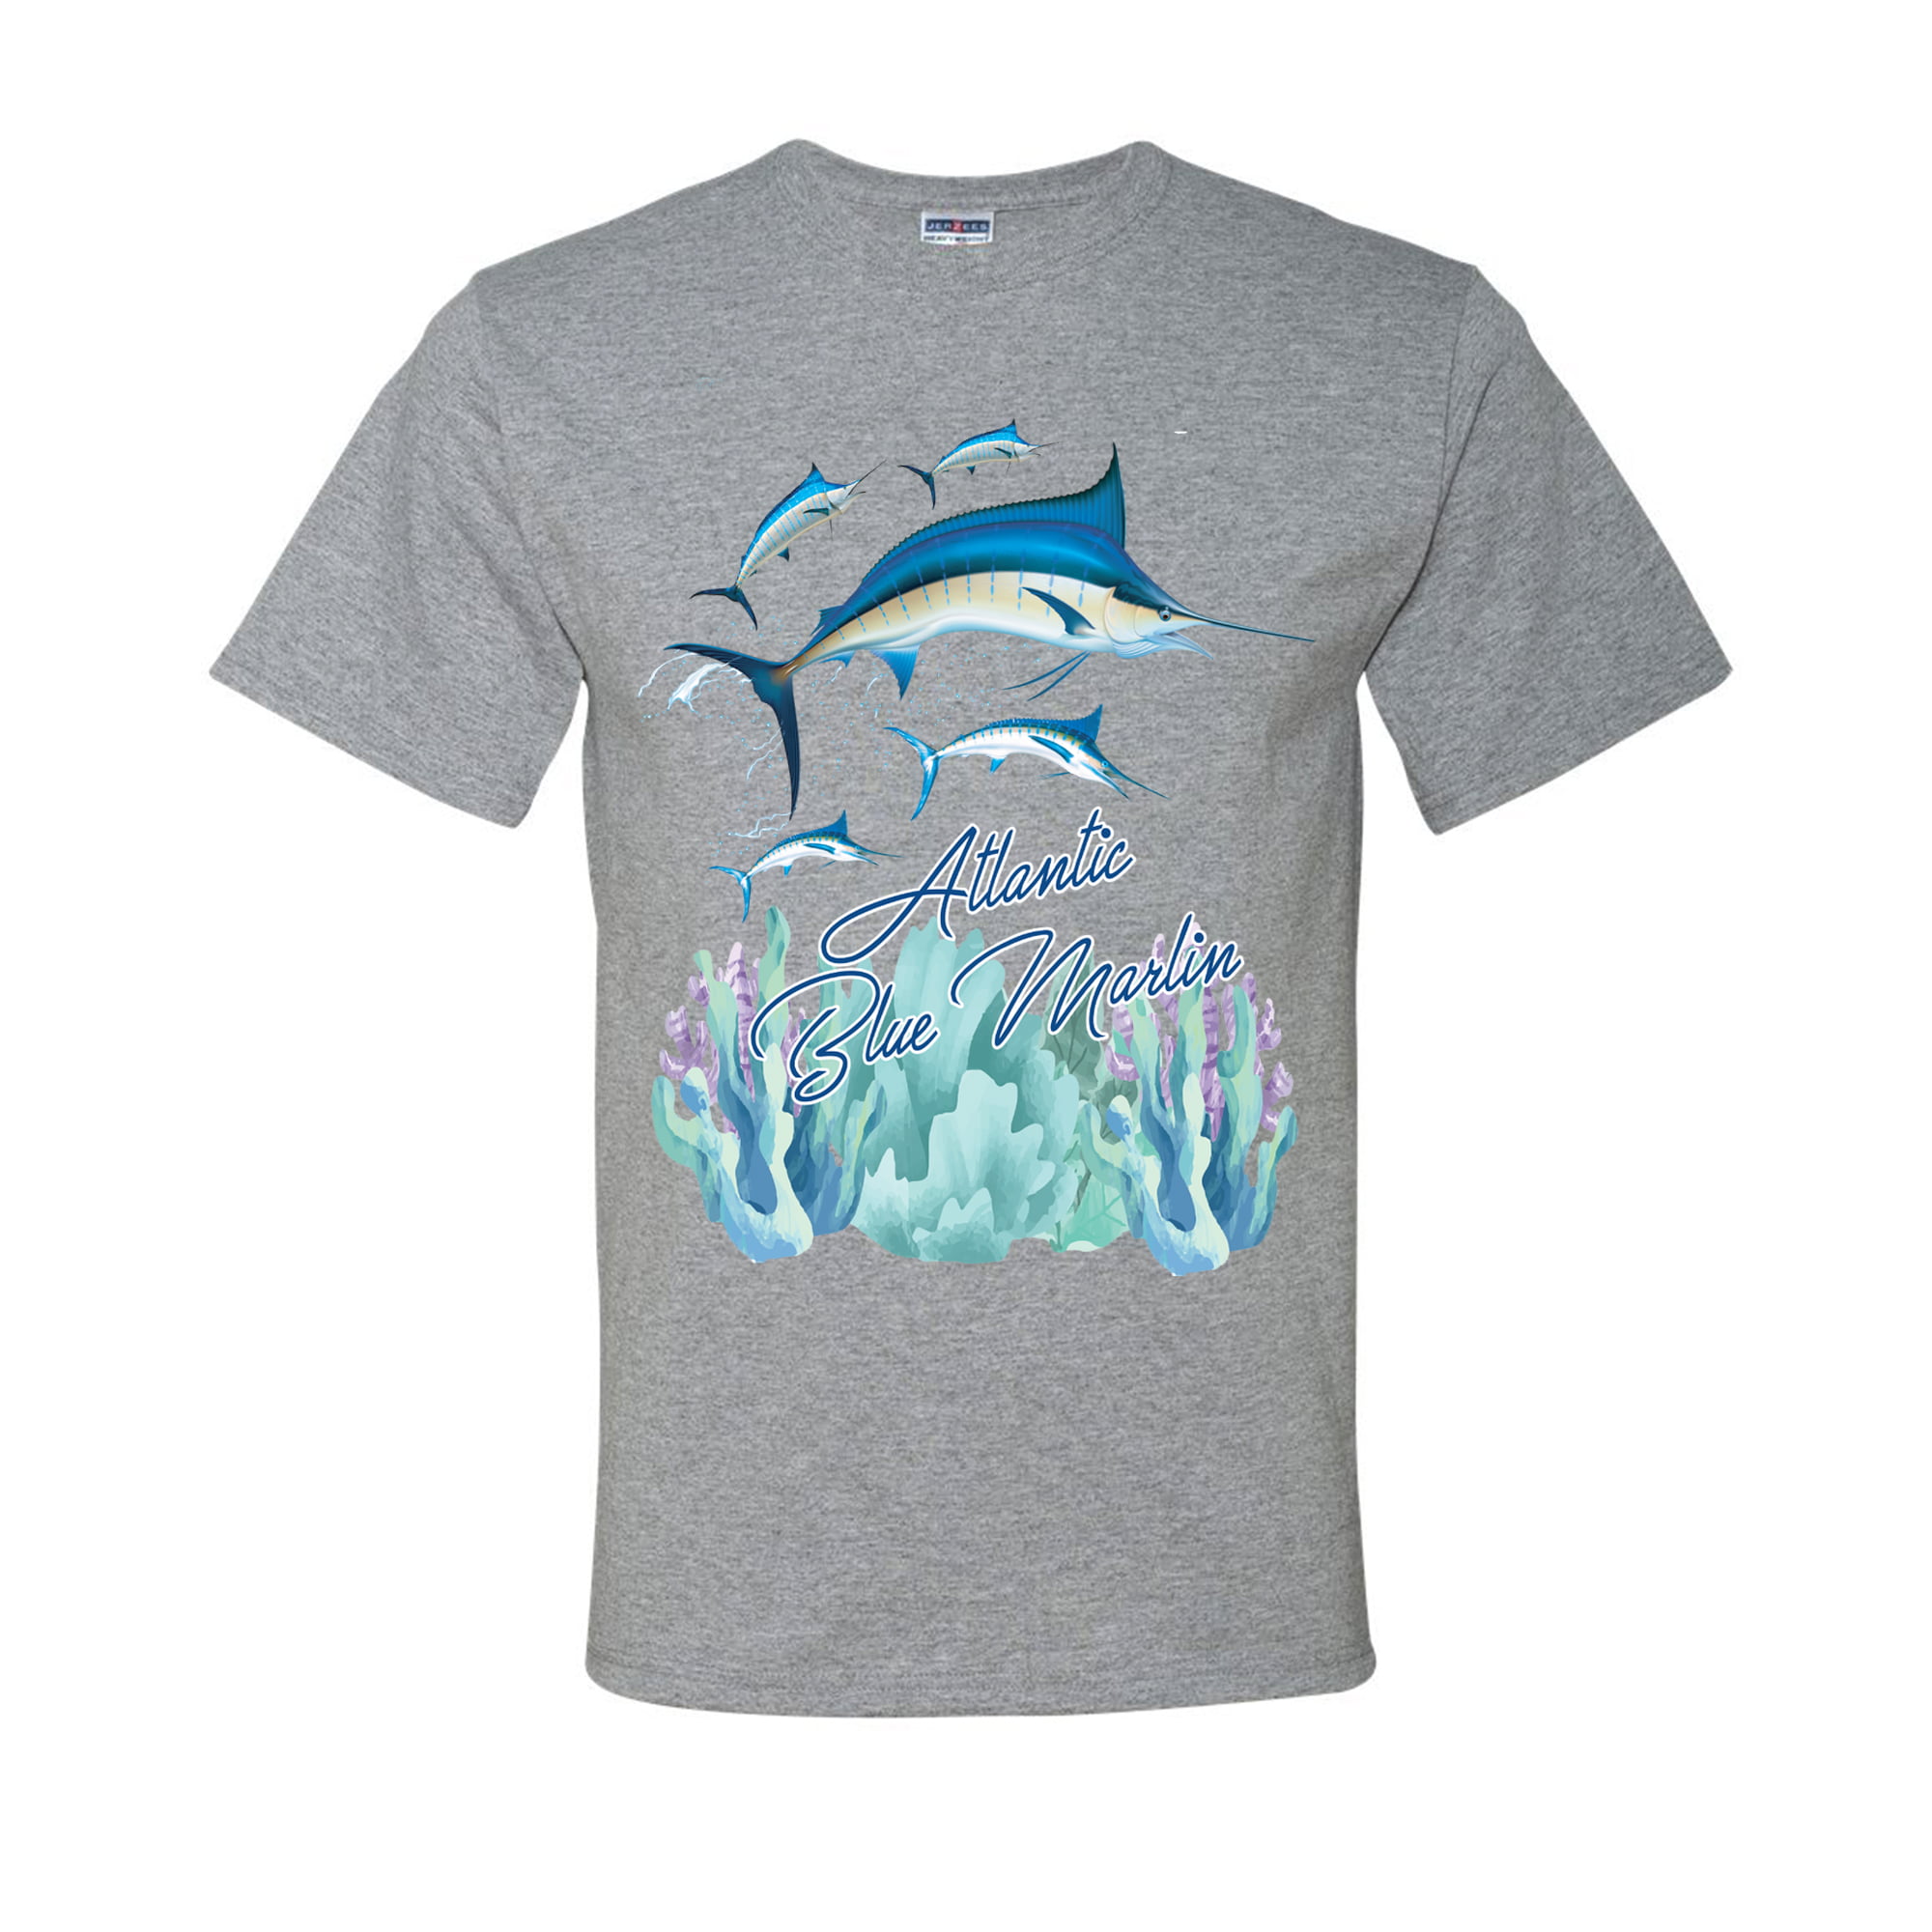 Atlantic Blue Marlin Fishing Lovers FONT AND BACK Mens T-shirts , Light  Blue, 2XL 